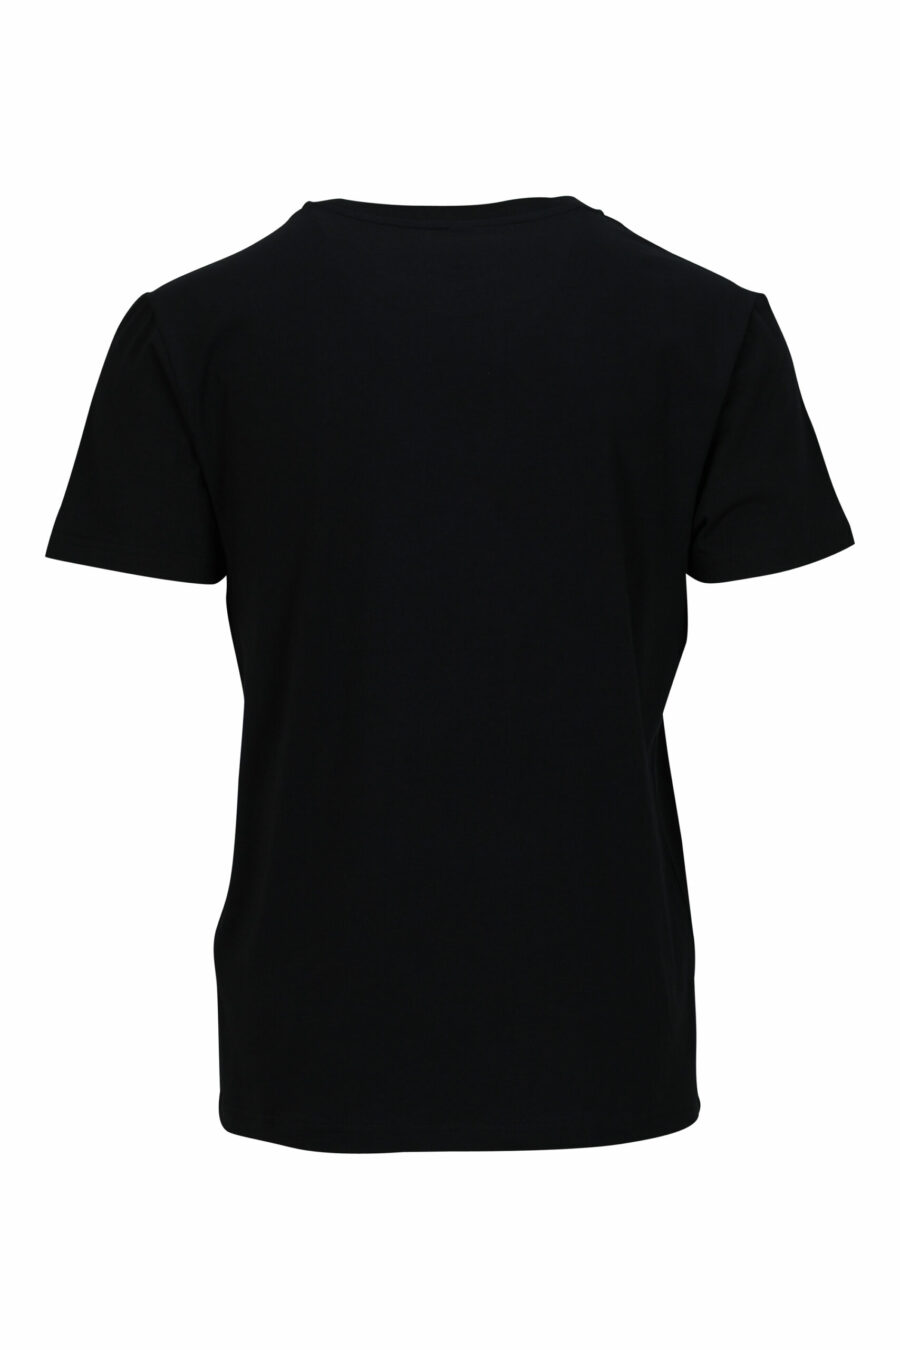 Camiseta negra con minilogo "swim" - 667113673530 1 scaled